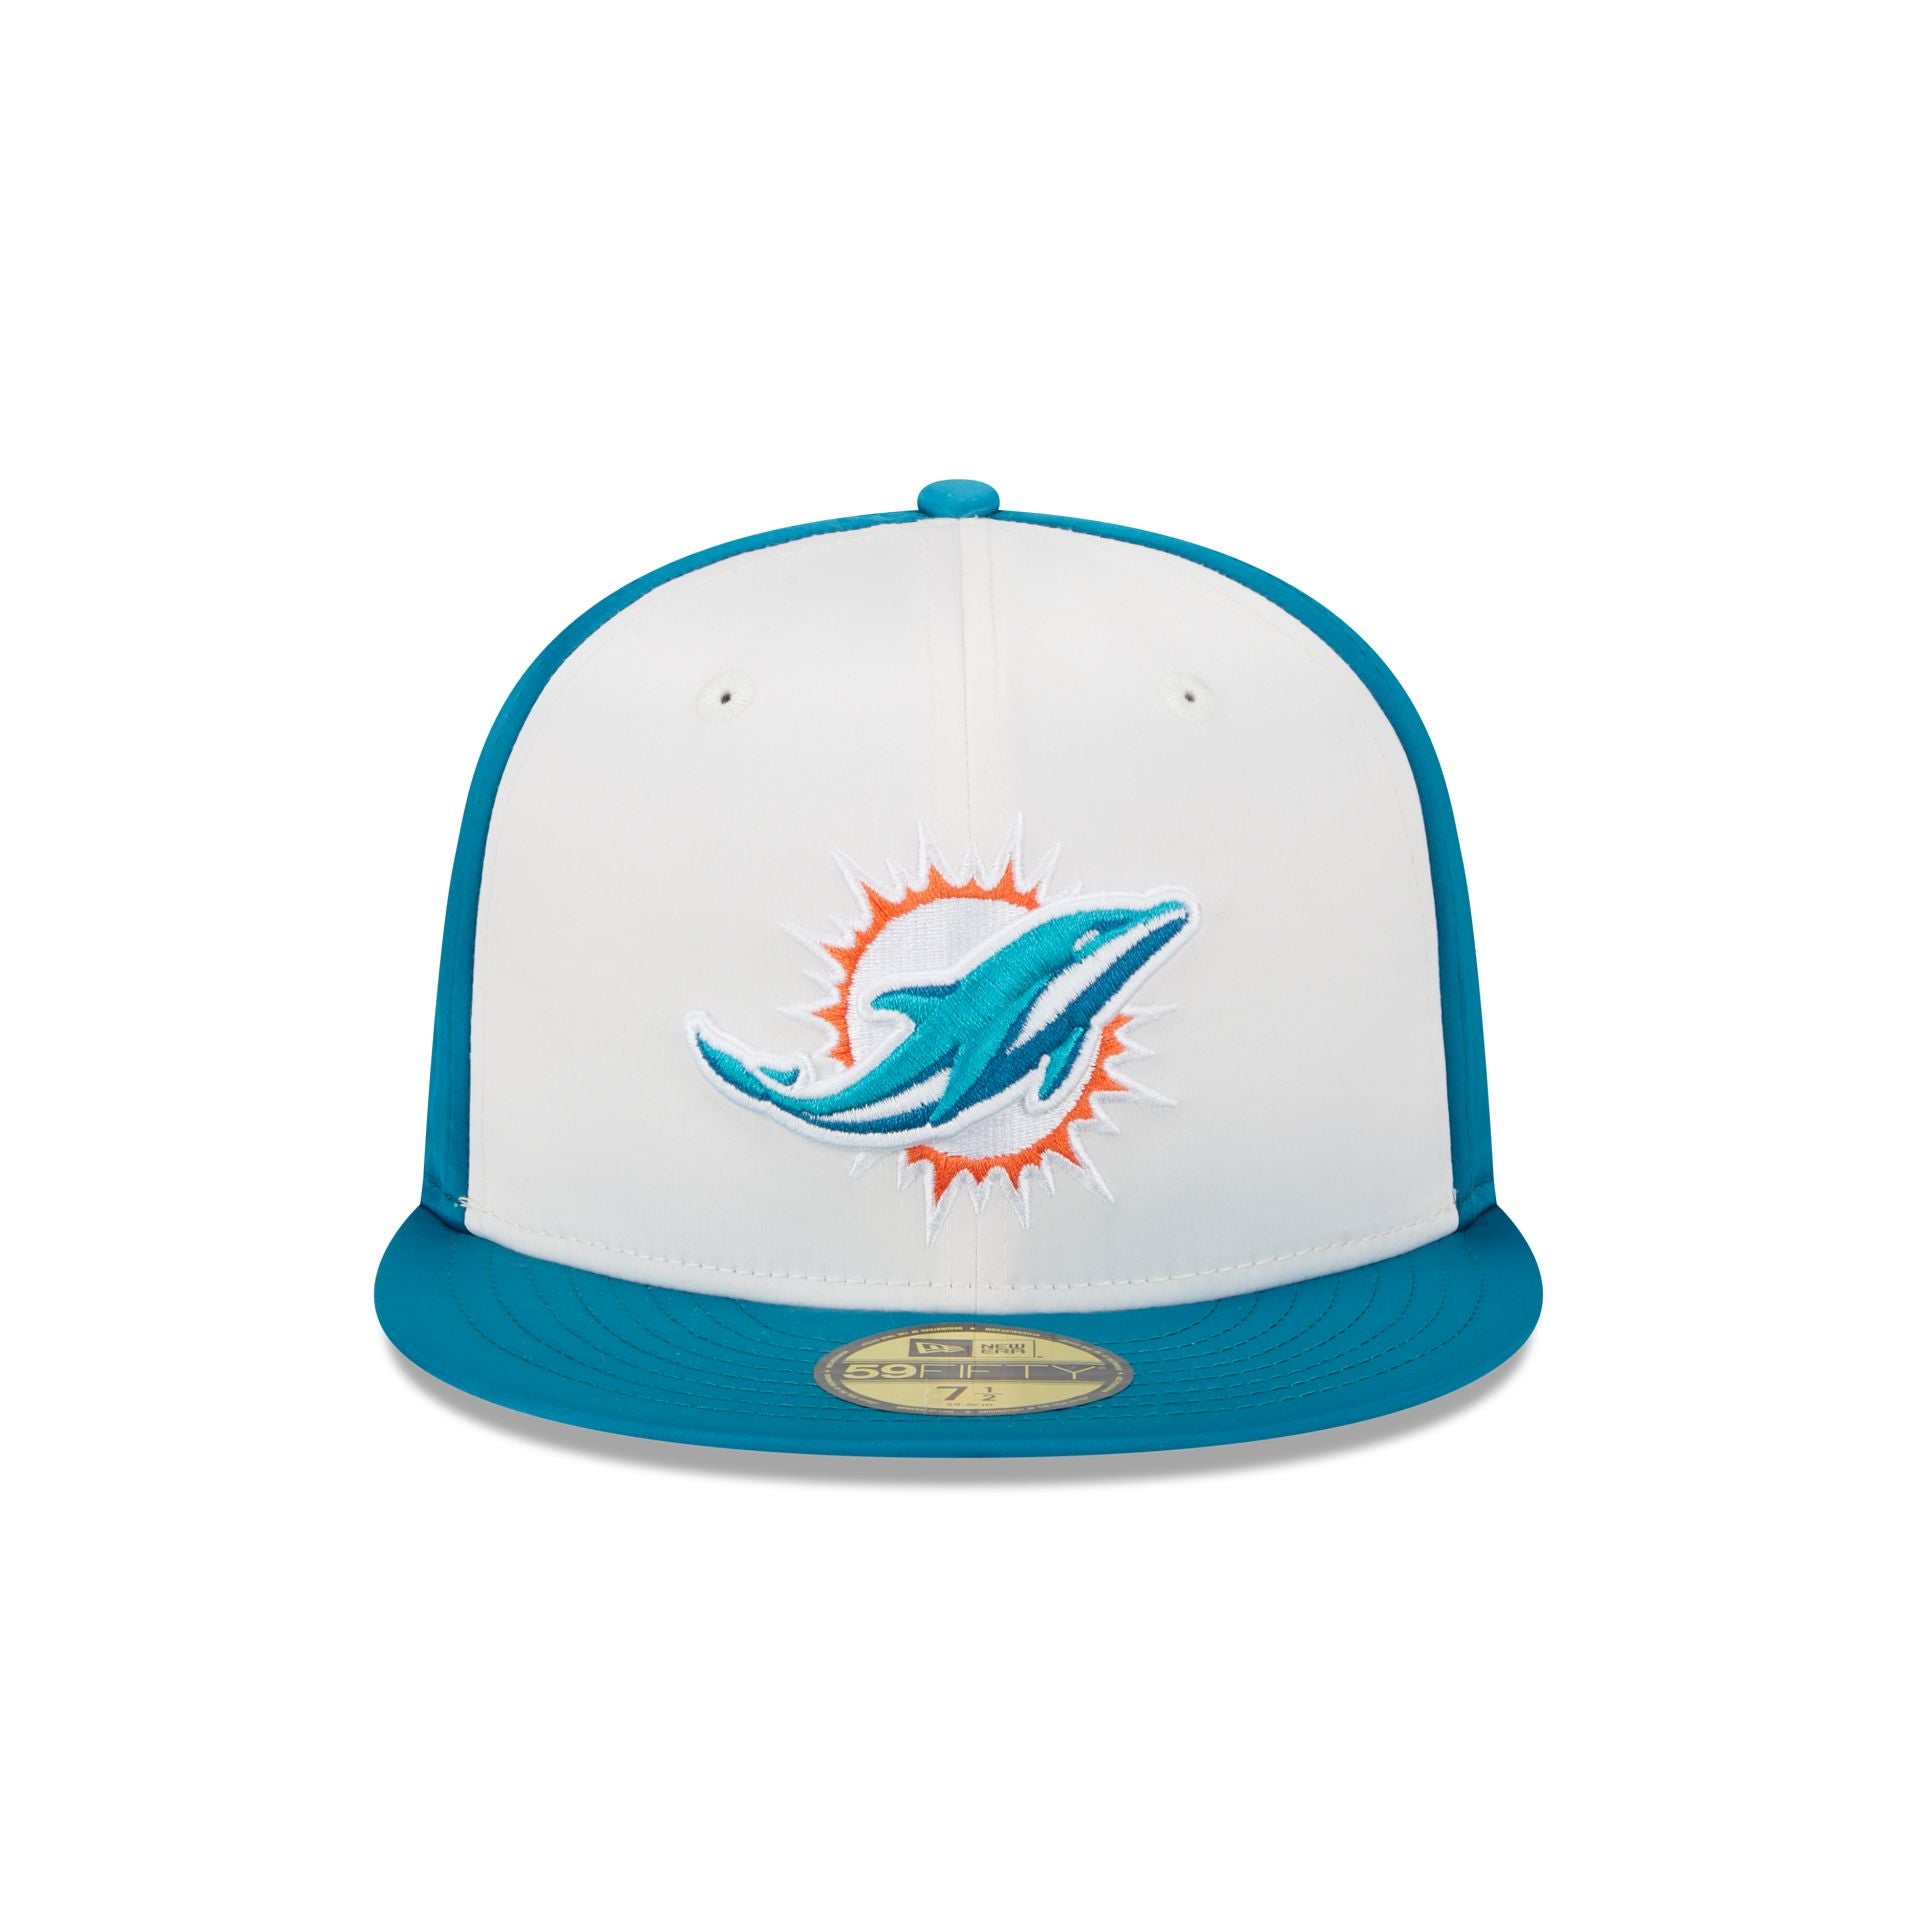 Miami Dolphins New Era 59FIFTY Cap